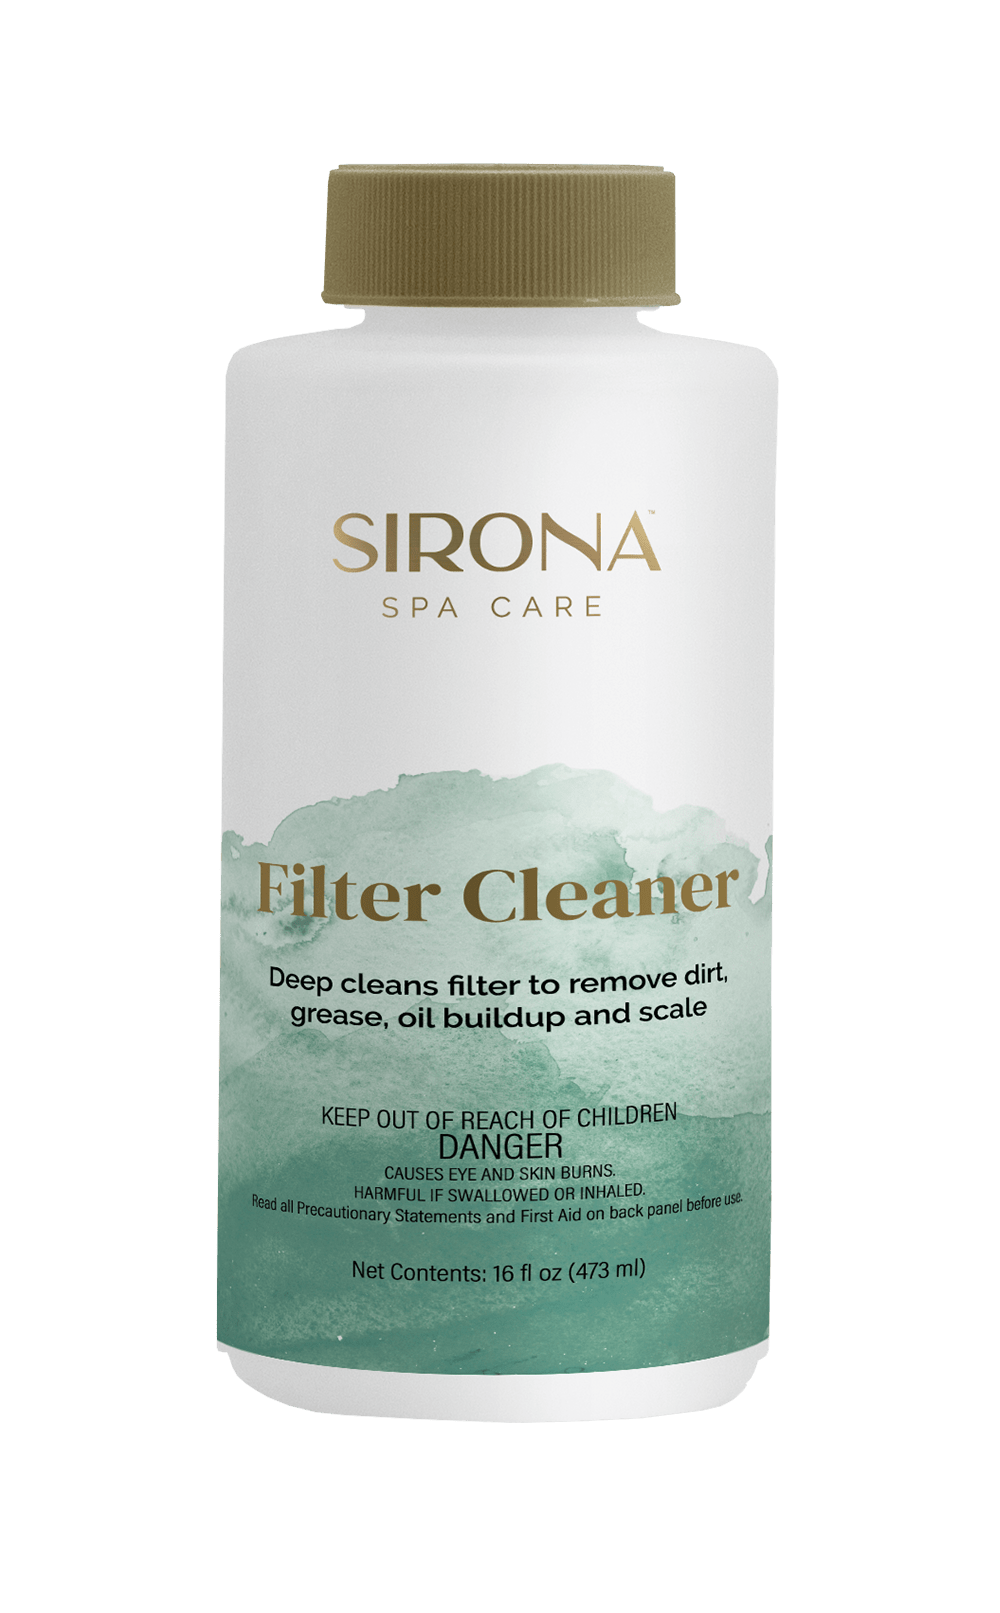 Filter Cleaner